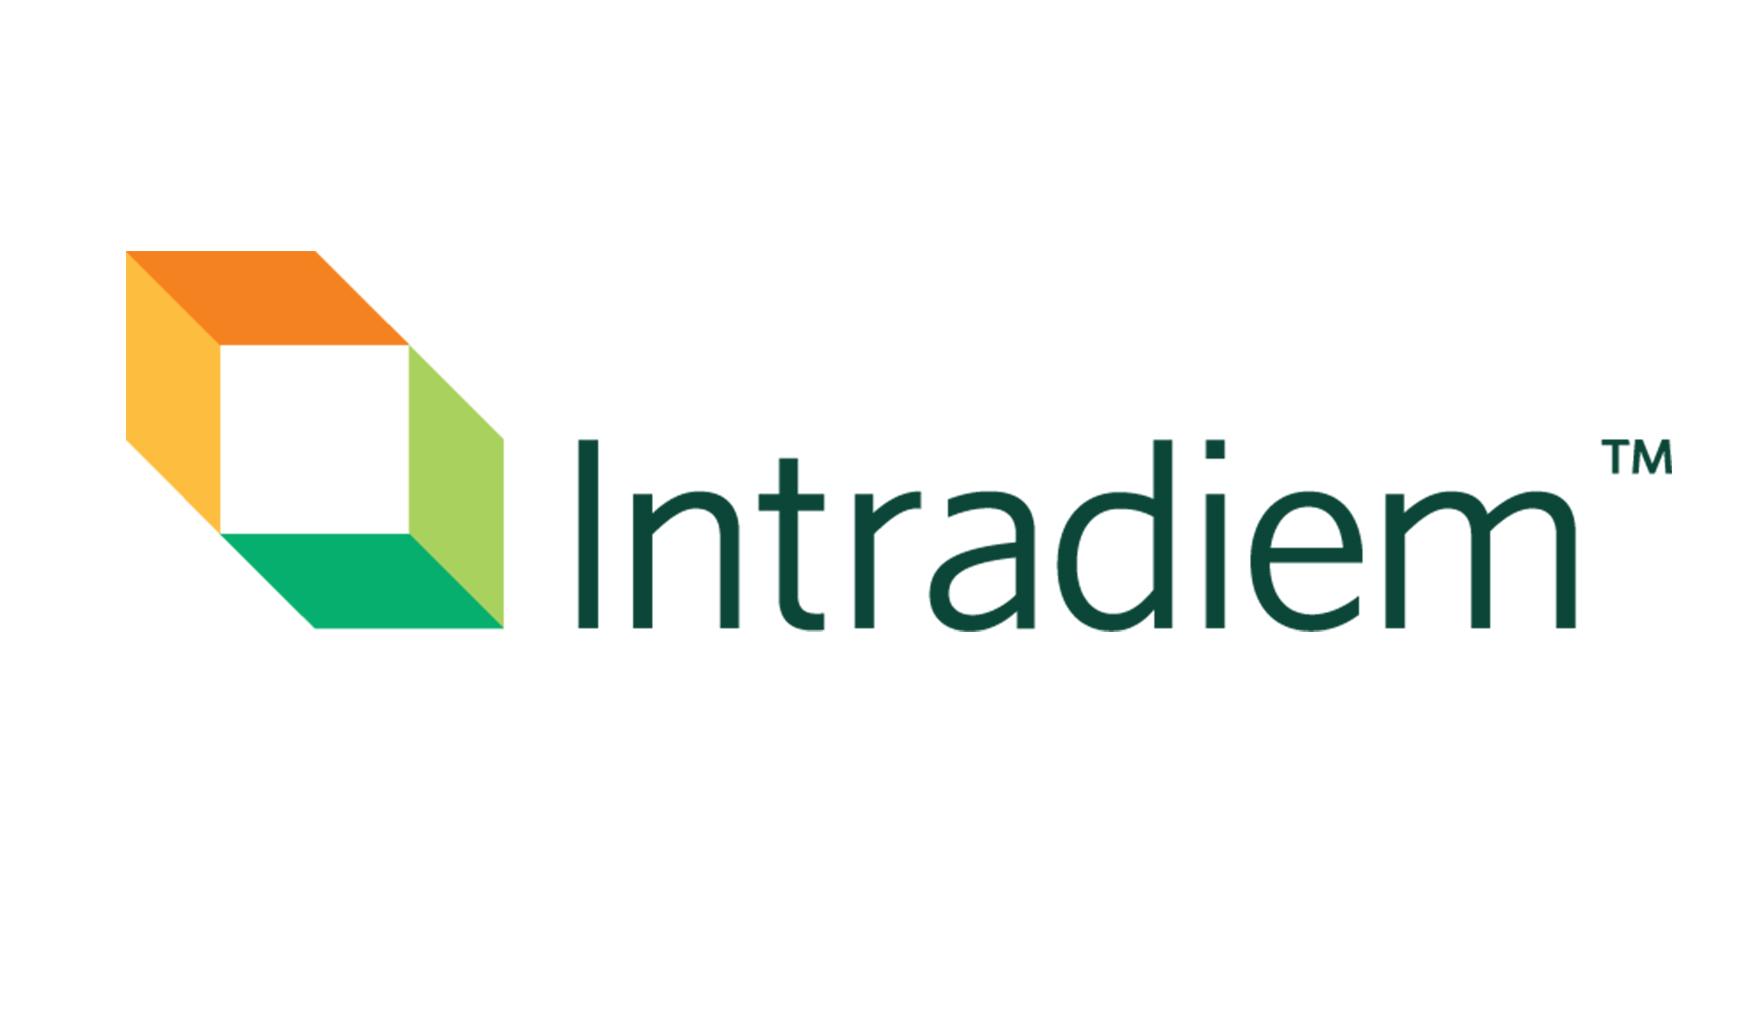 Intradiem Logo - Intradiem People Officer